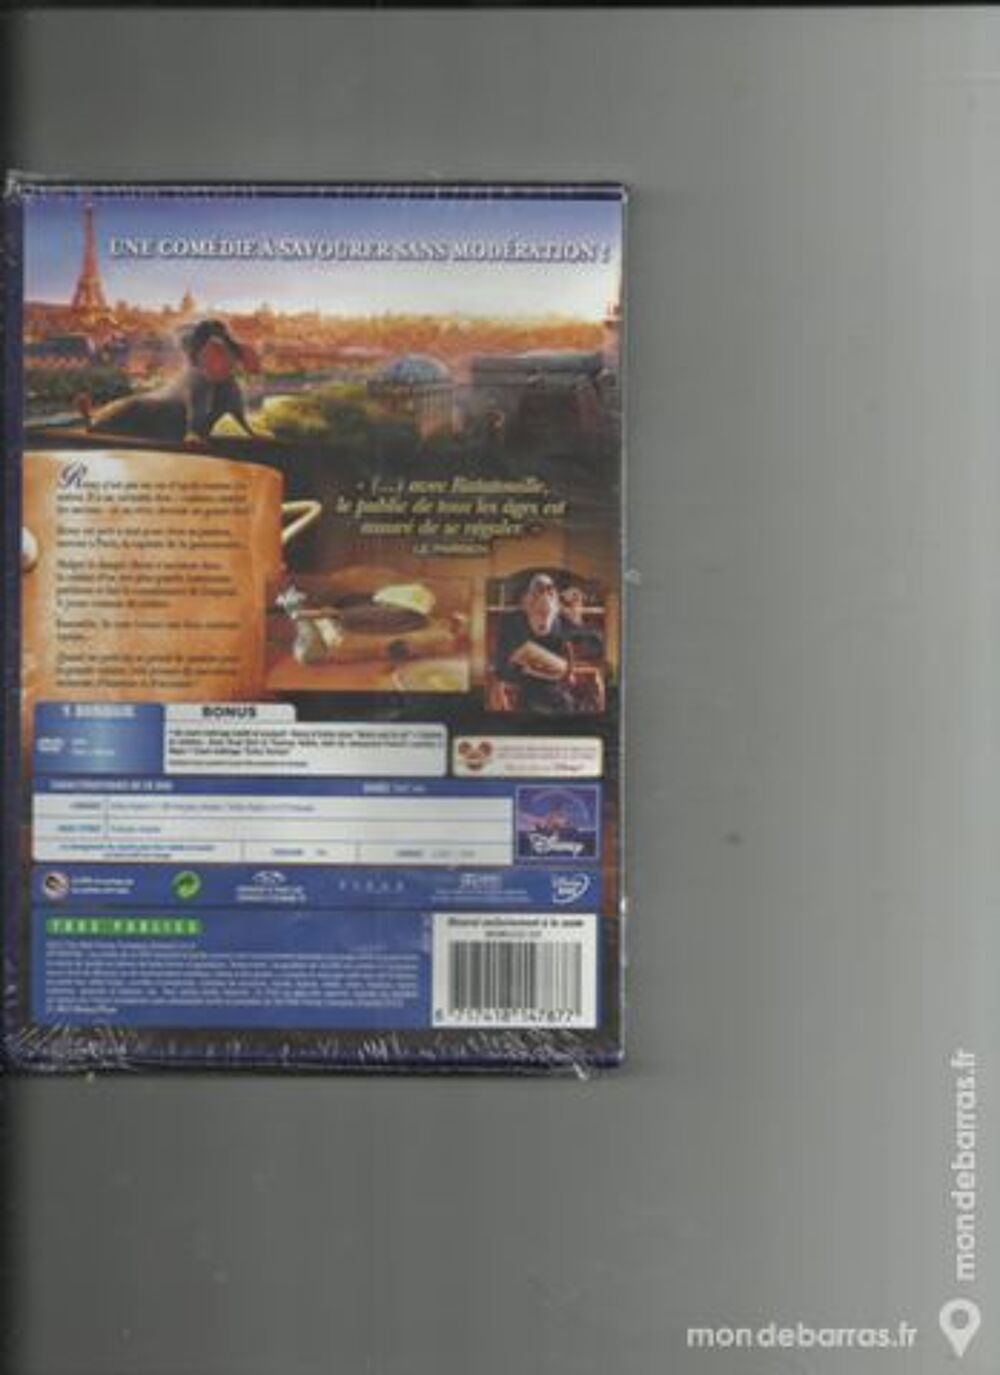 DVD RATATOUILLE DVD et blu-ray